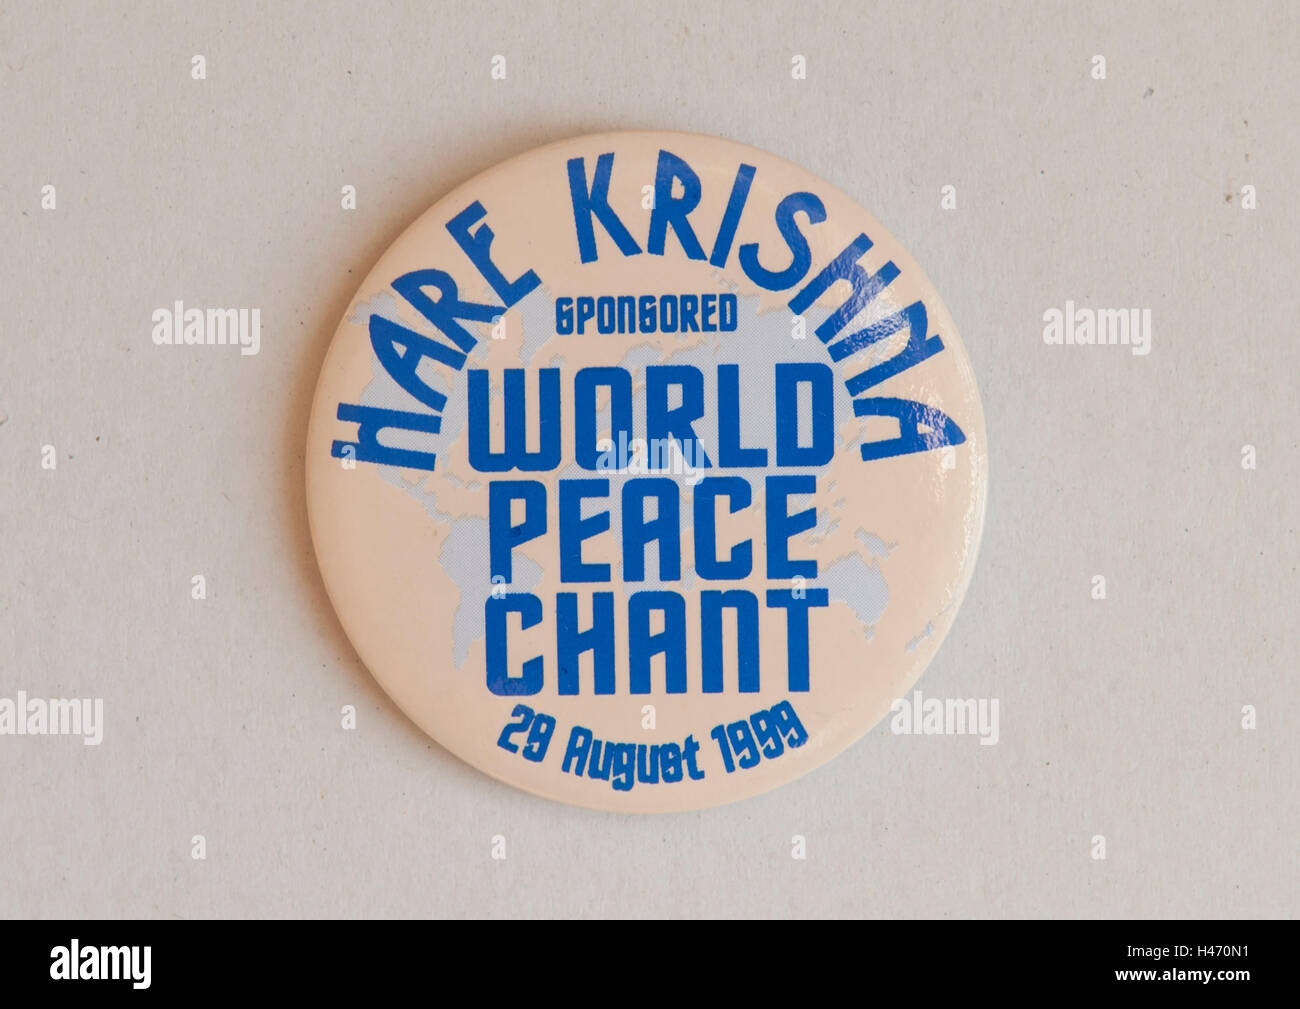 Hare Krishna sponsored World Peace Chant 28 August 1989 London Uk HOMER SYKES Stock Photo